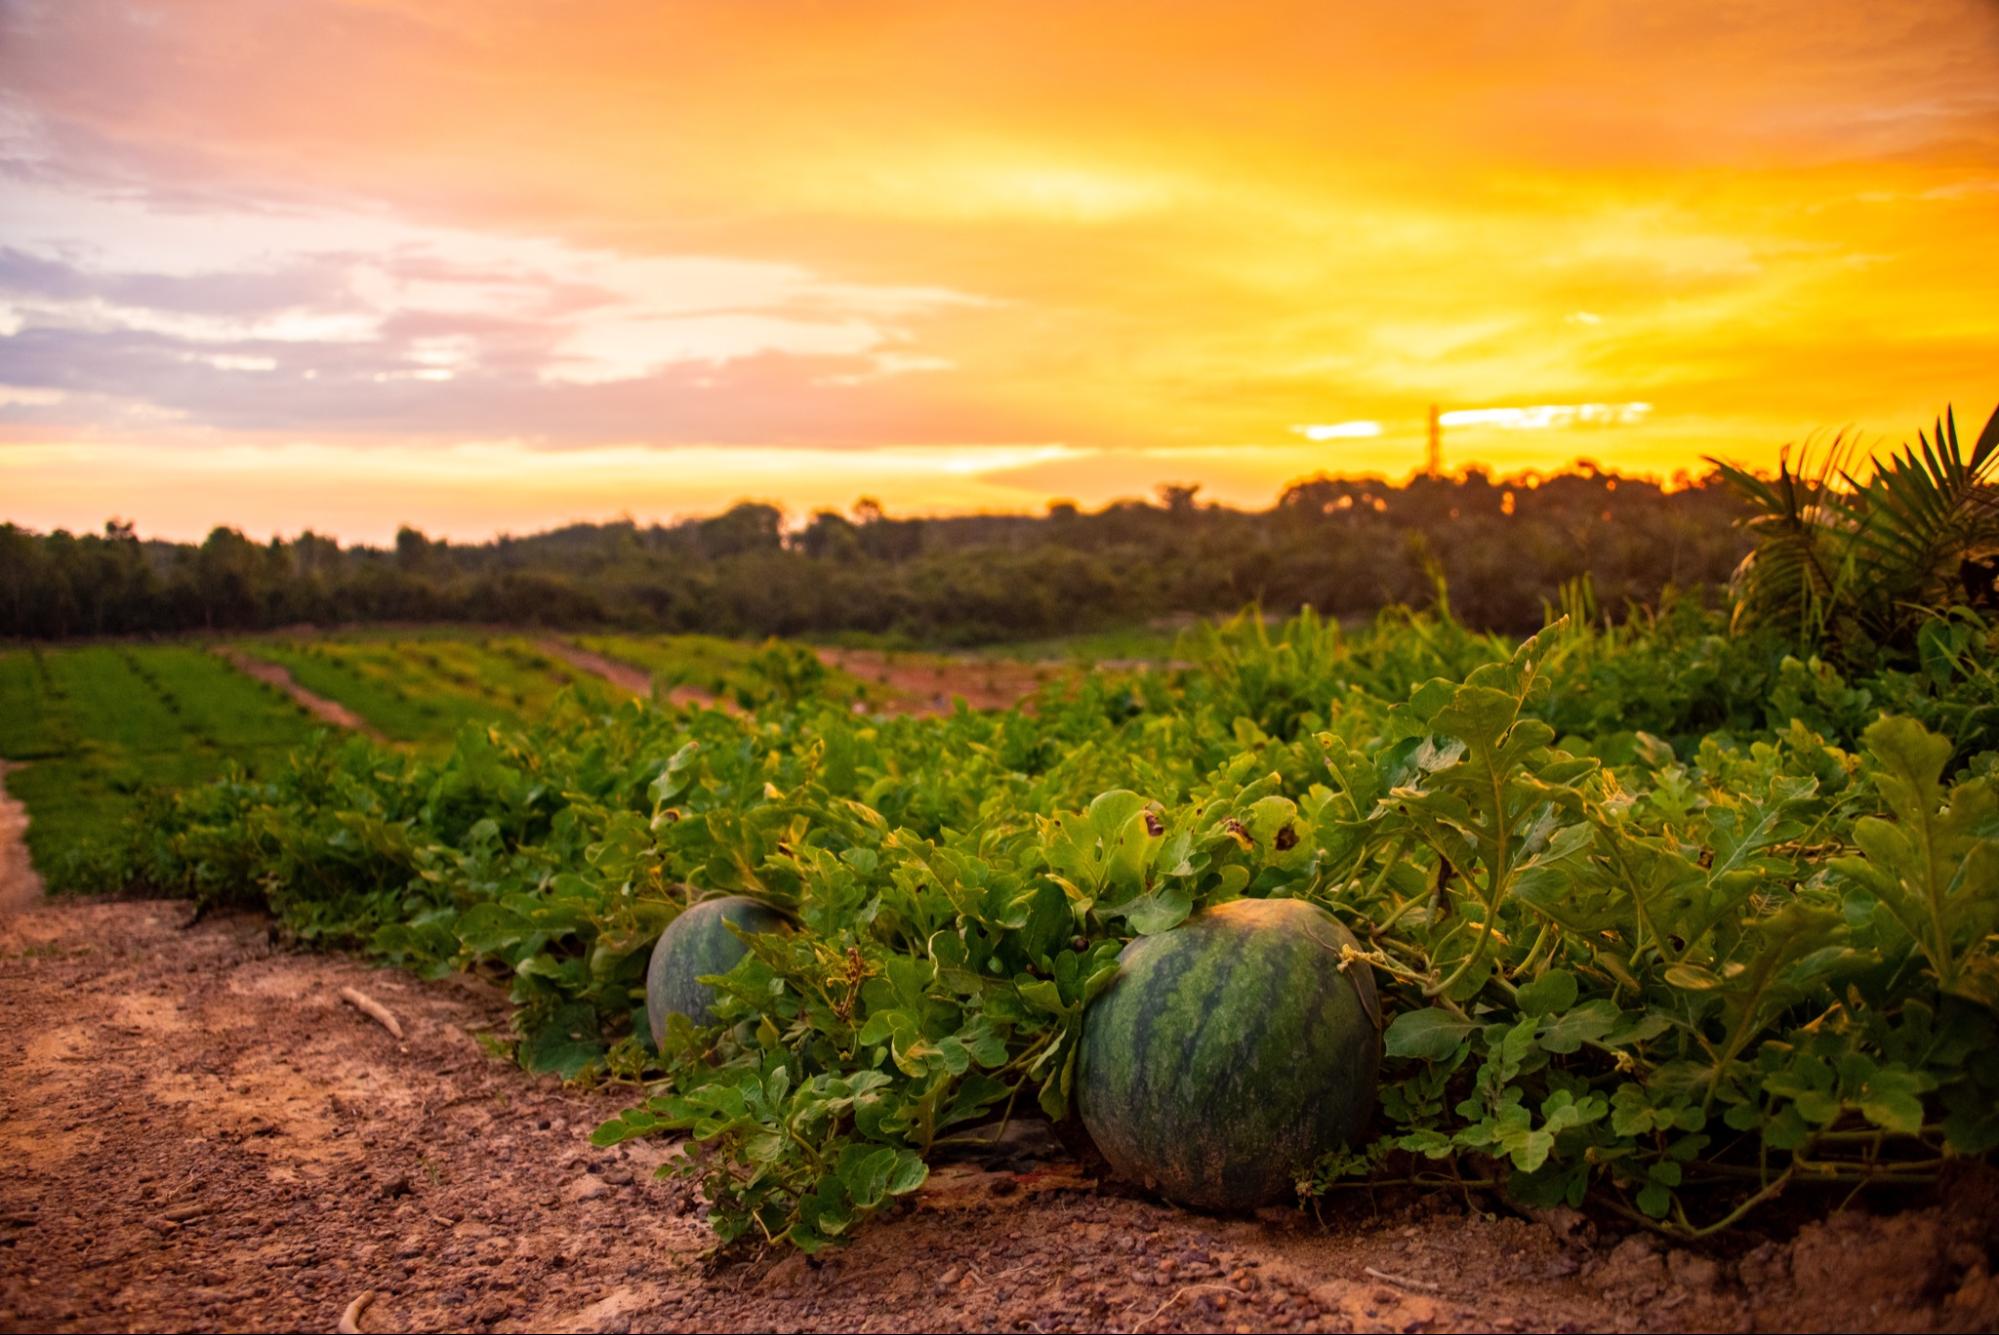 melon farming in malaysia - sunrise over farm